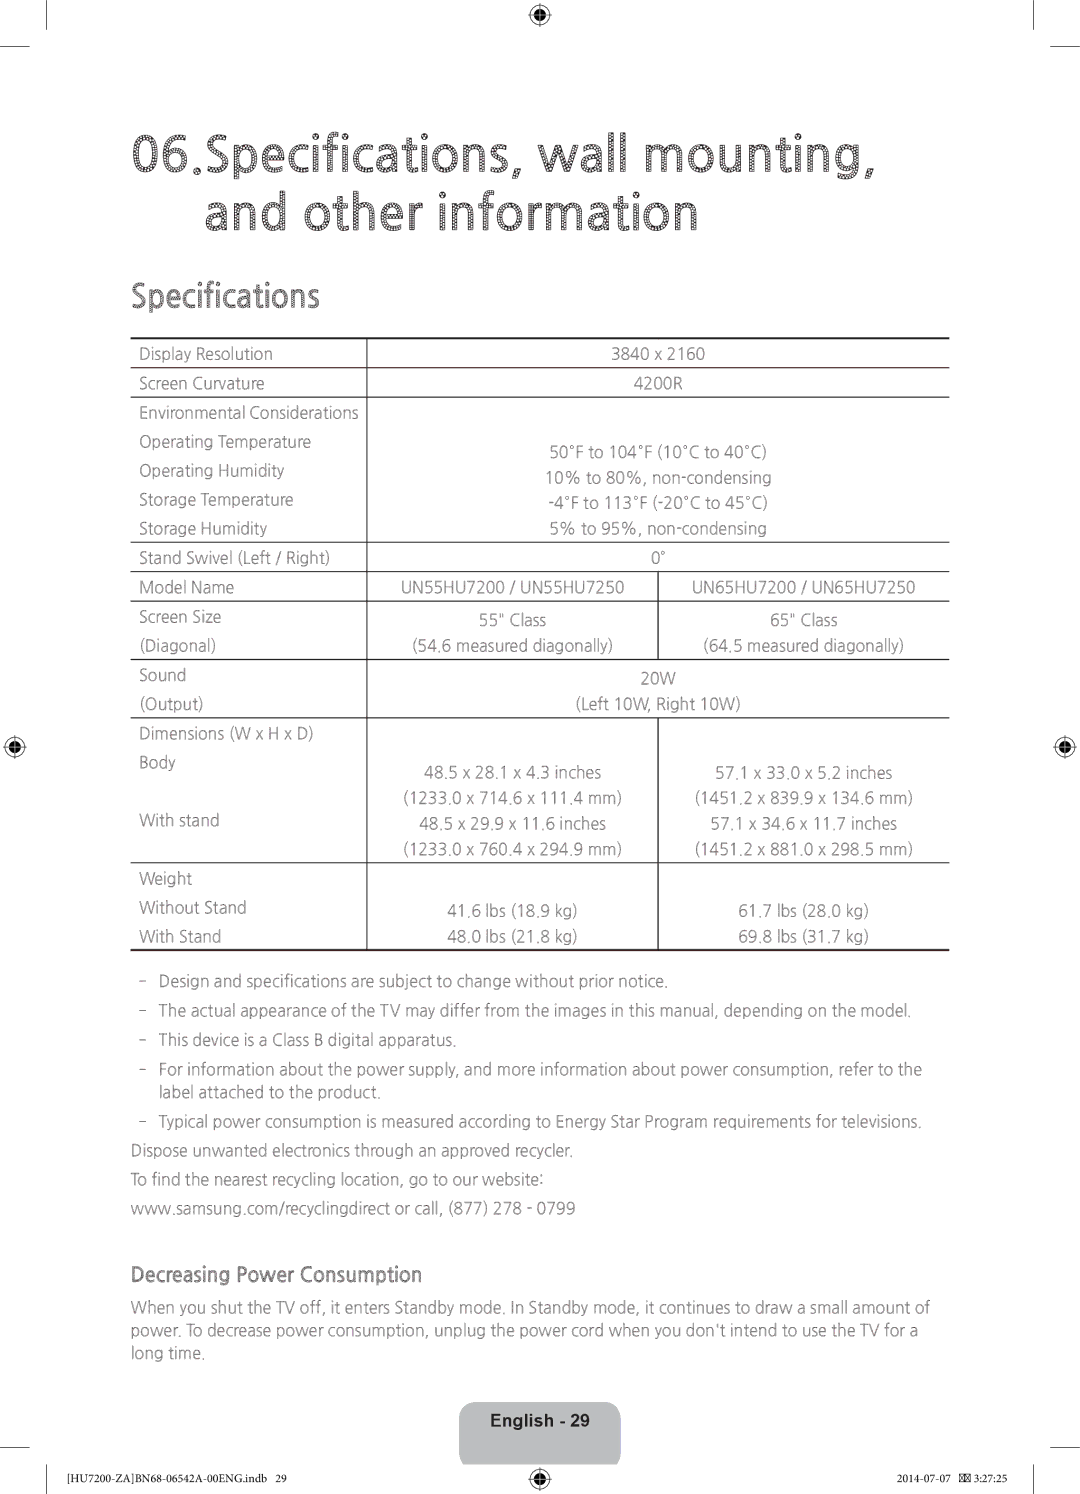 Samsung UN65HU7250 user manual Specifications, Decreasing Power Consumption 